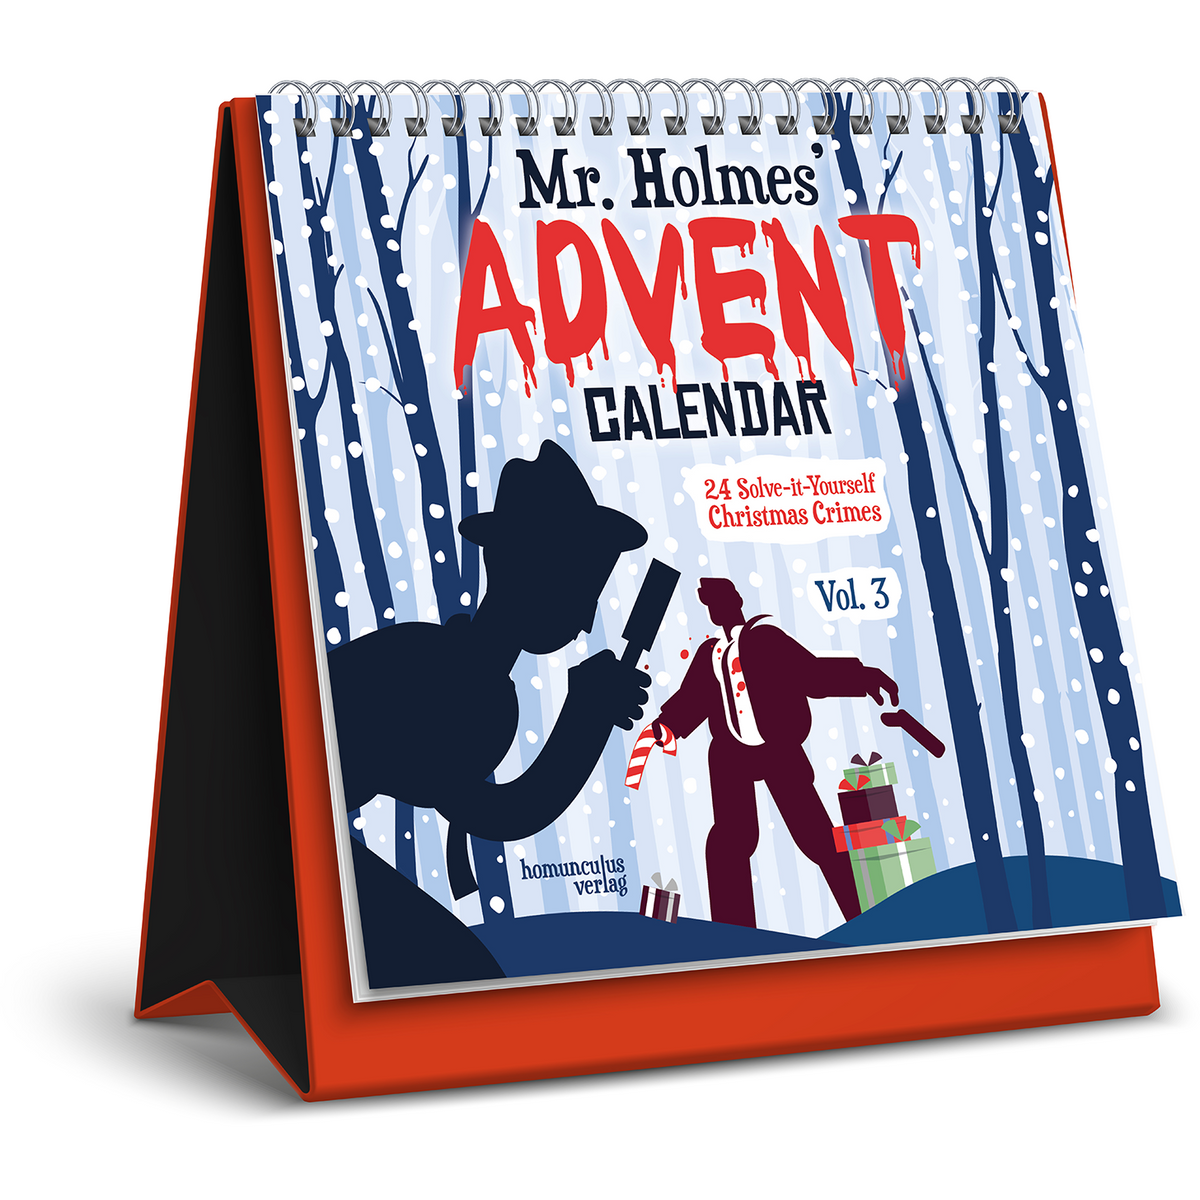 Mr Holmes' Advent Calendar 24 SolveitYourself Christmas Crimes V